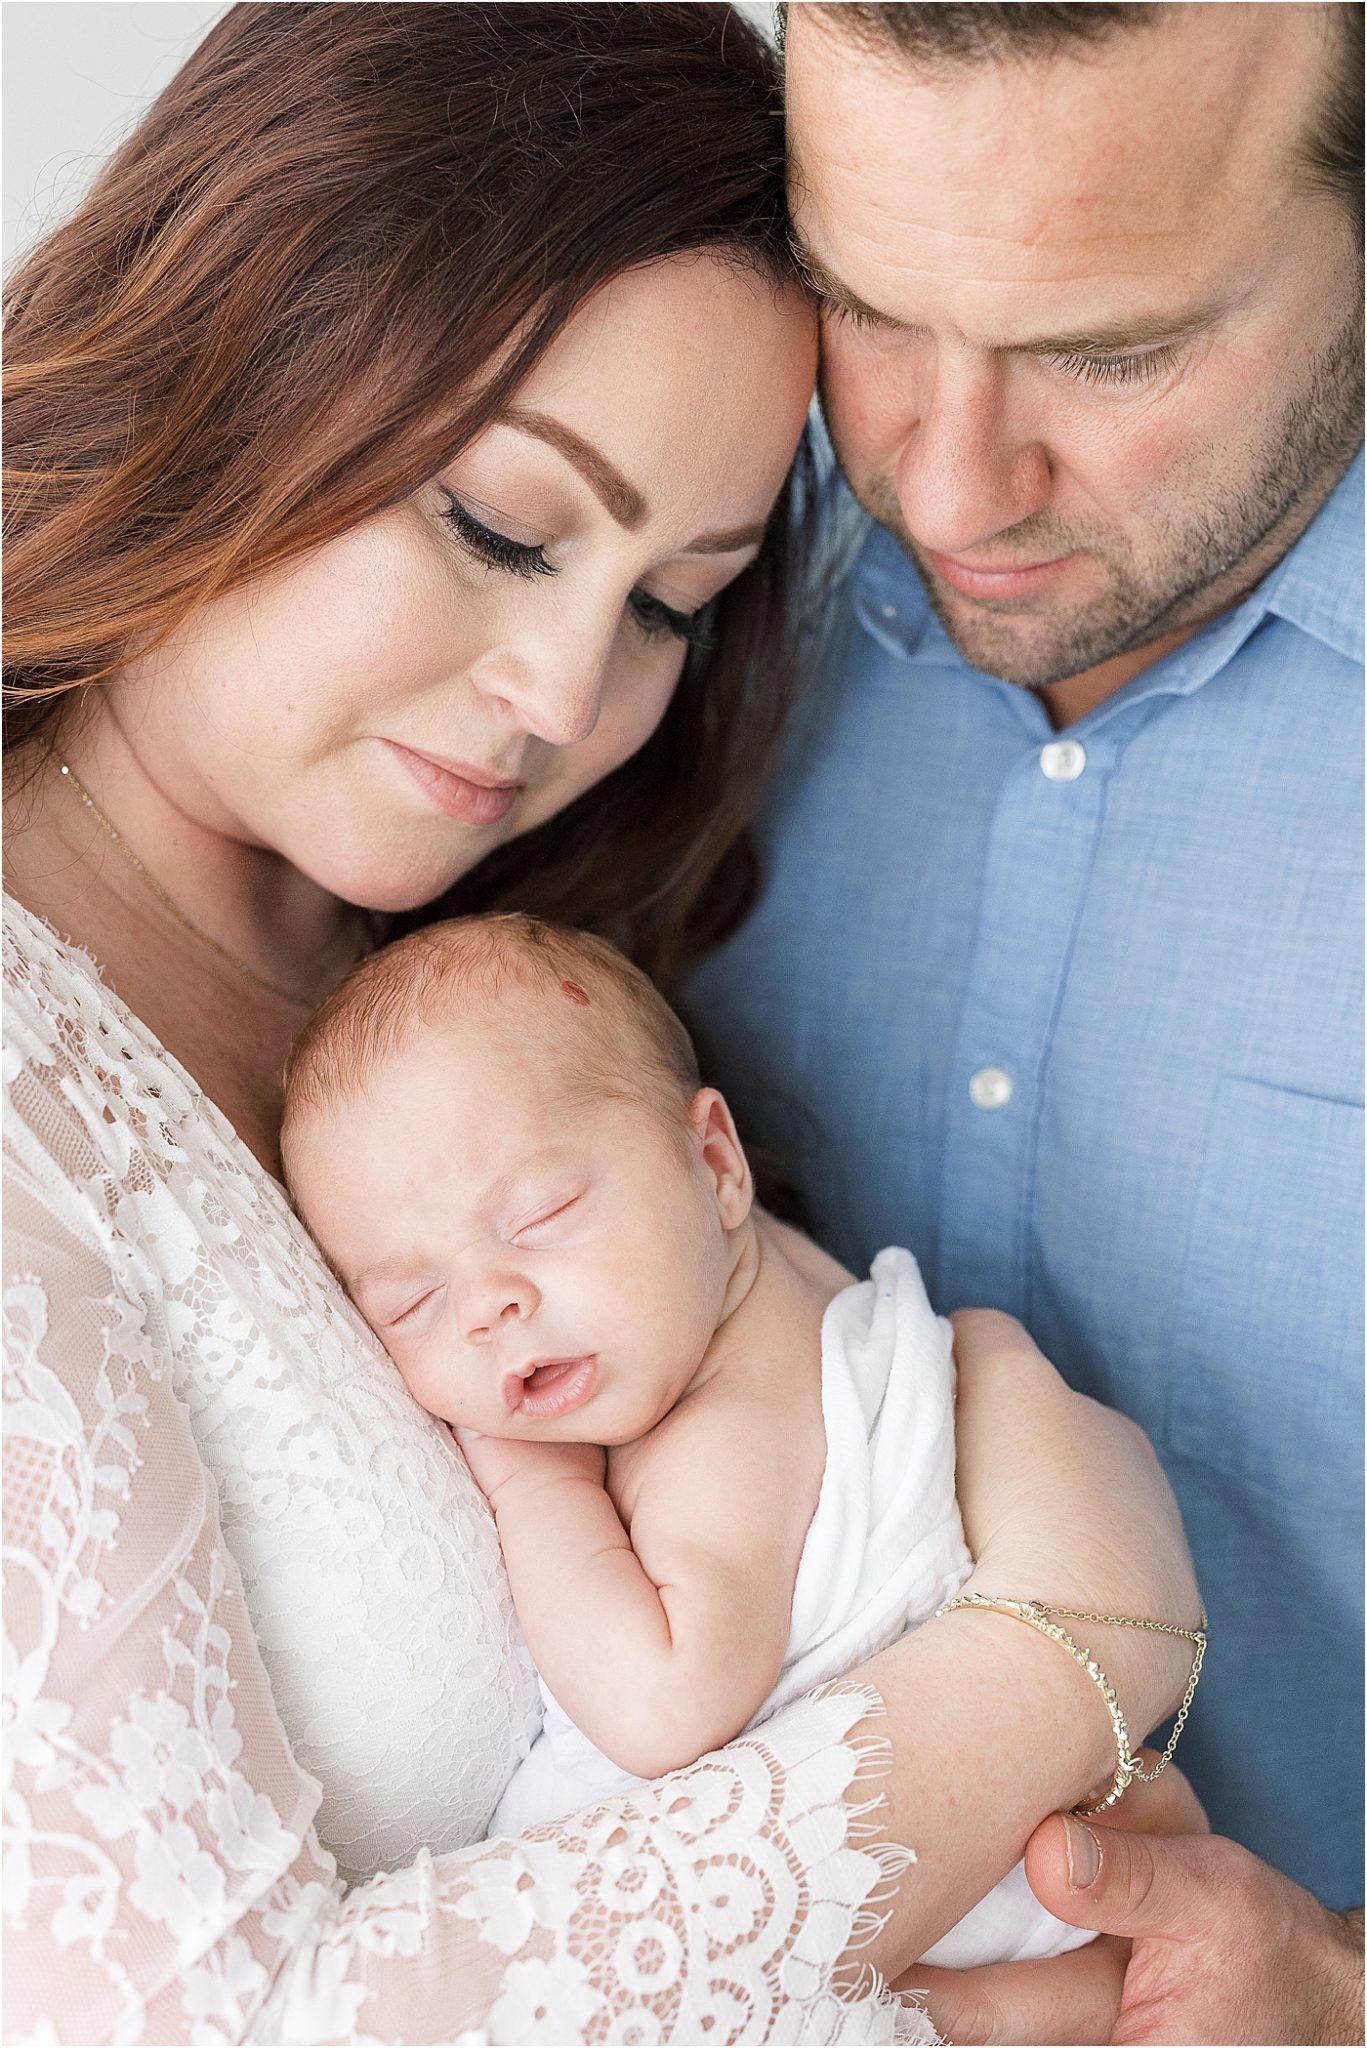 Newborn session with premie baby boy. Photo by Lindsay Konopa Photography.